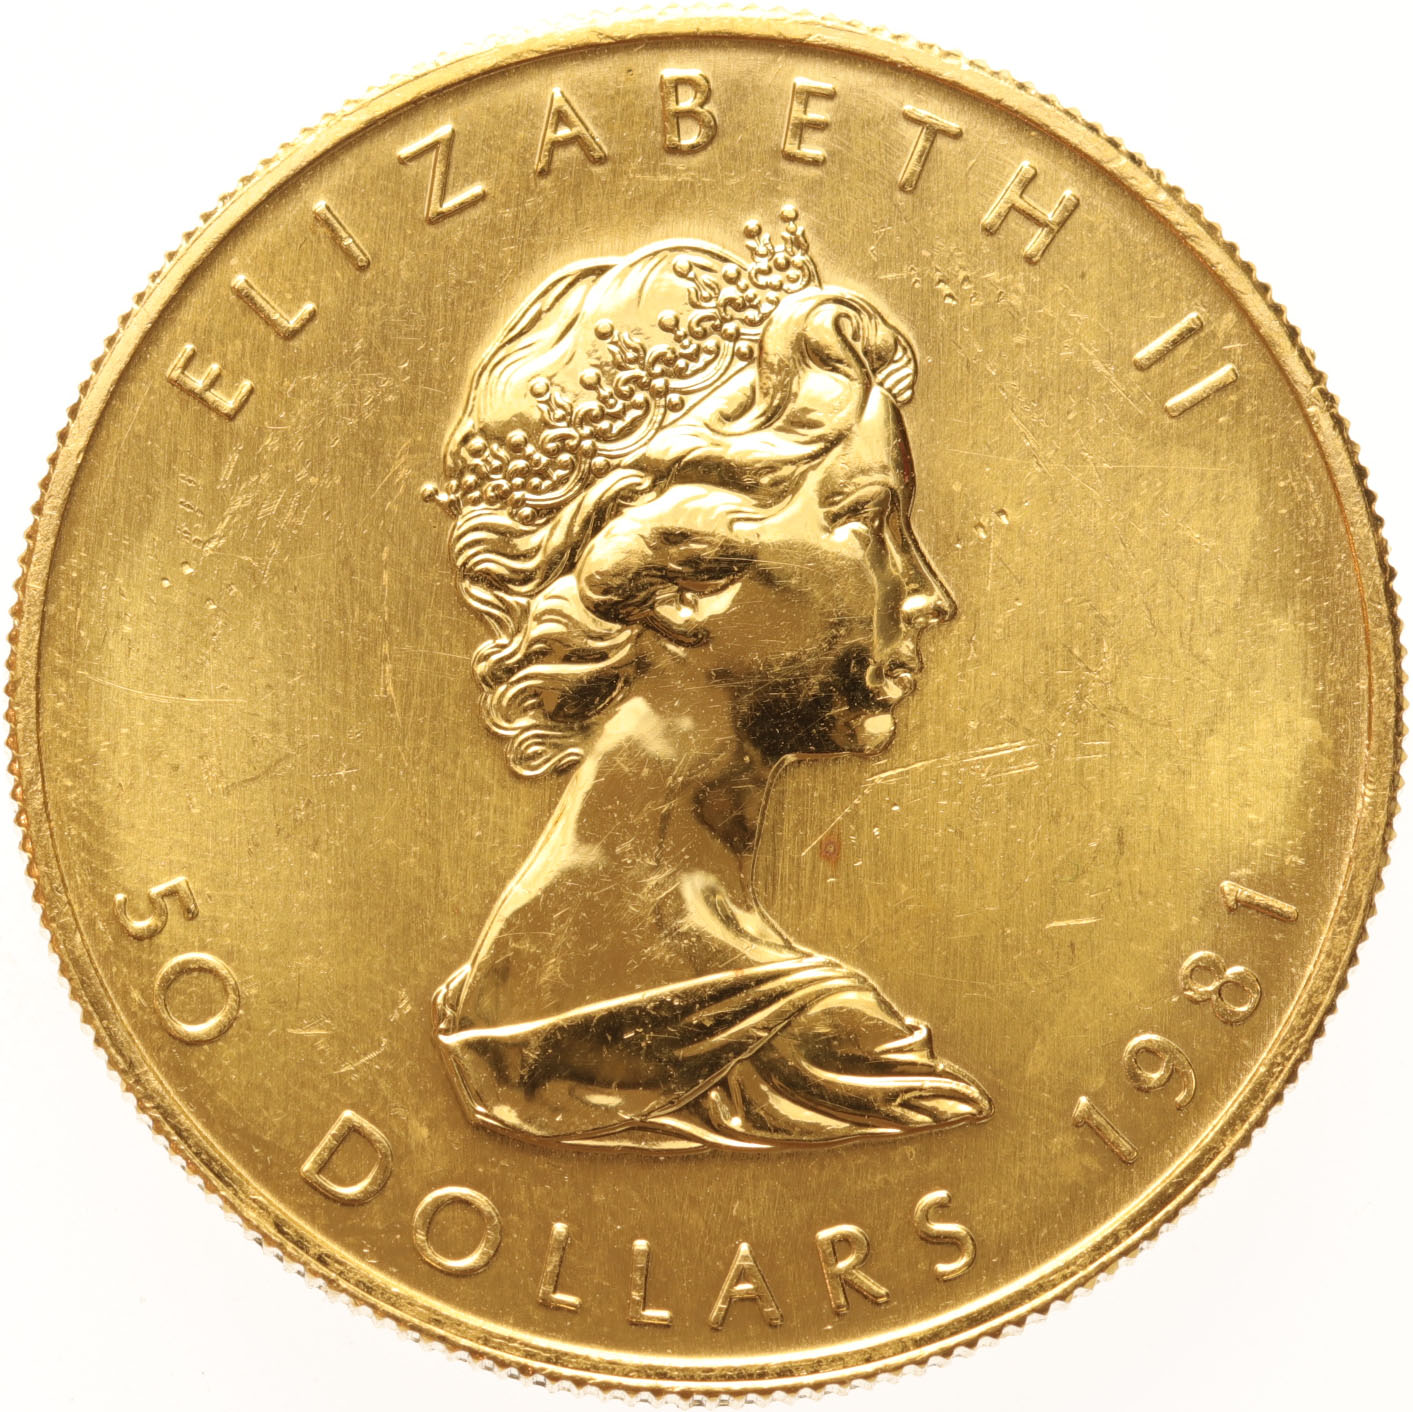 Canada 50 dollars 1981